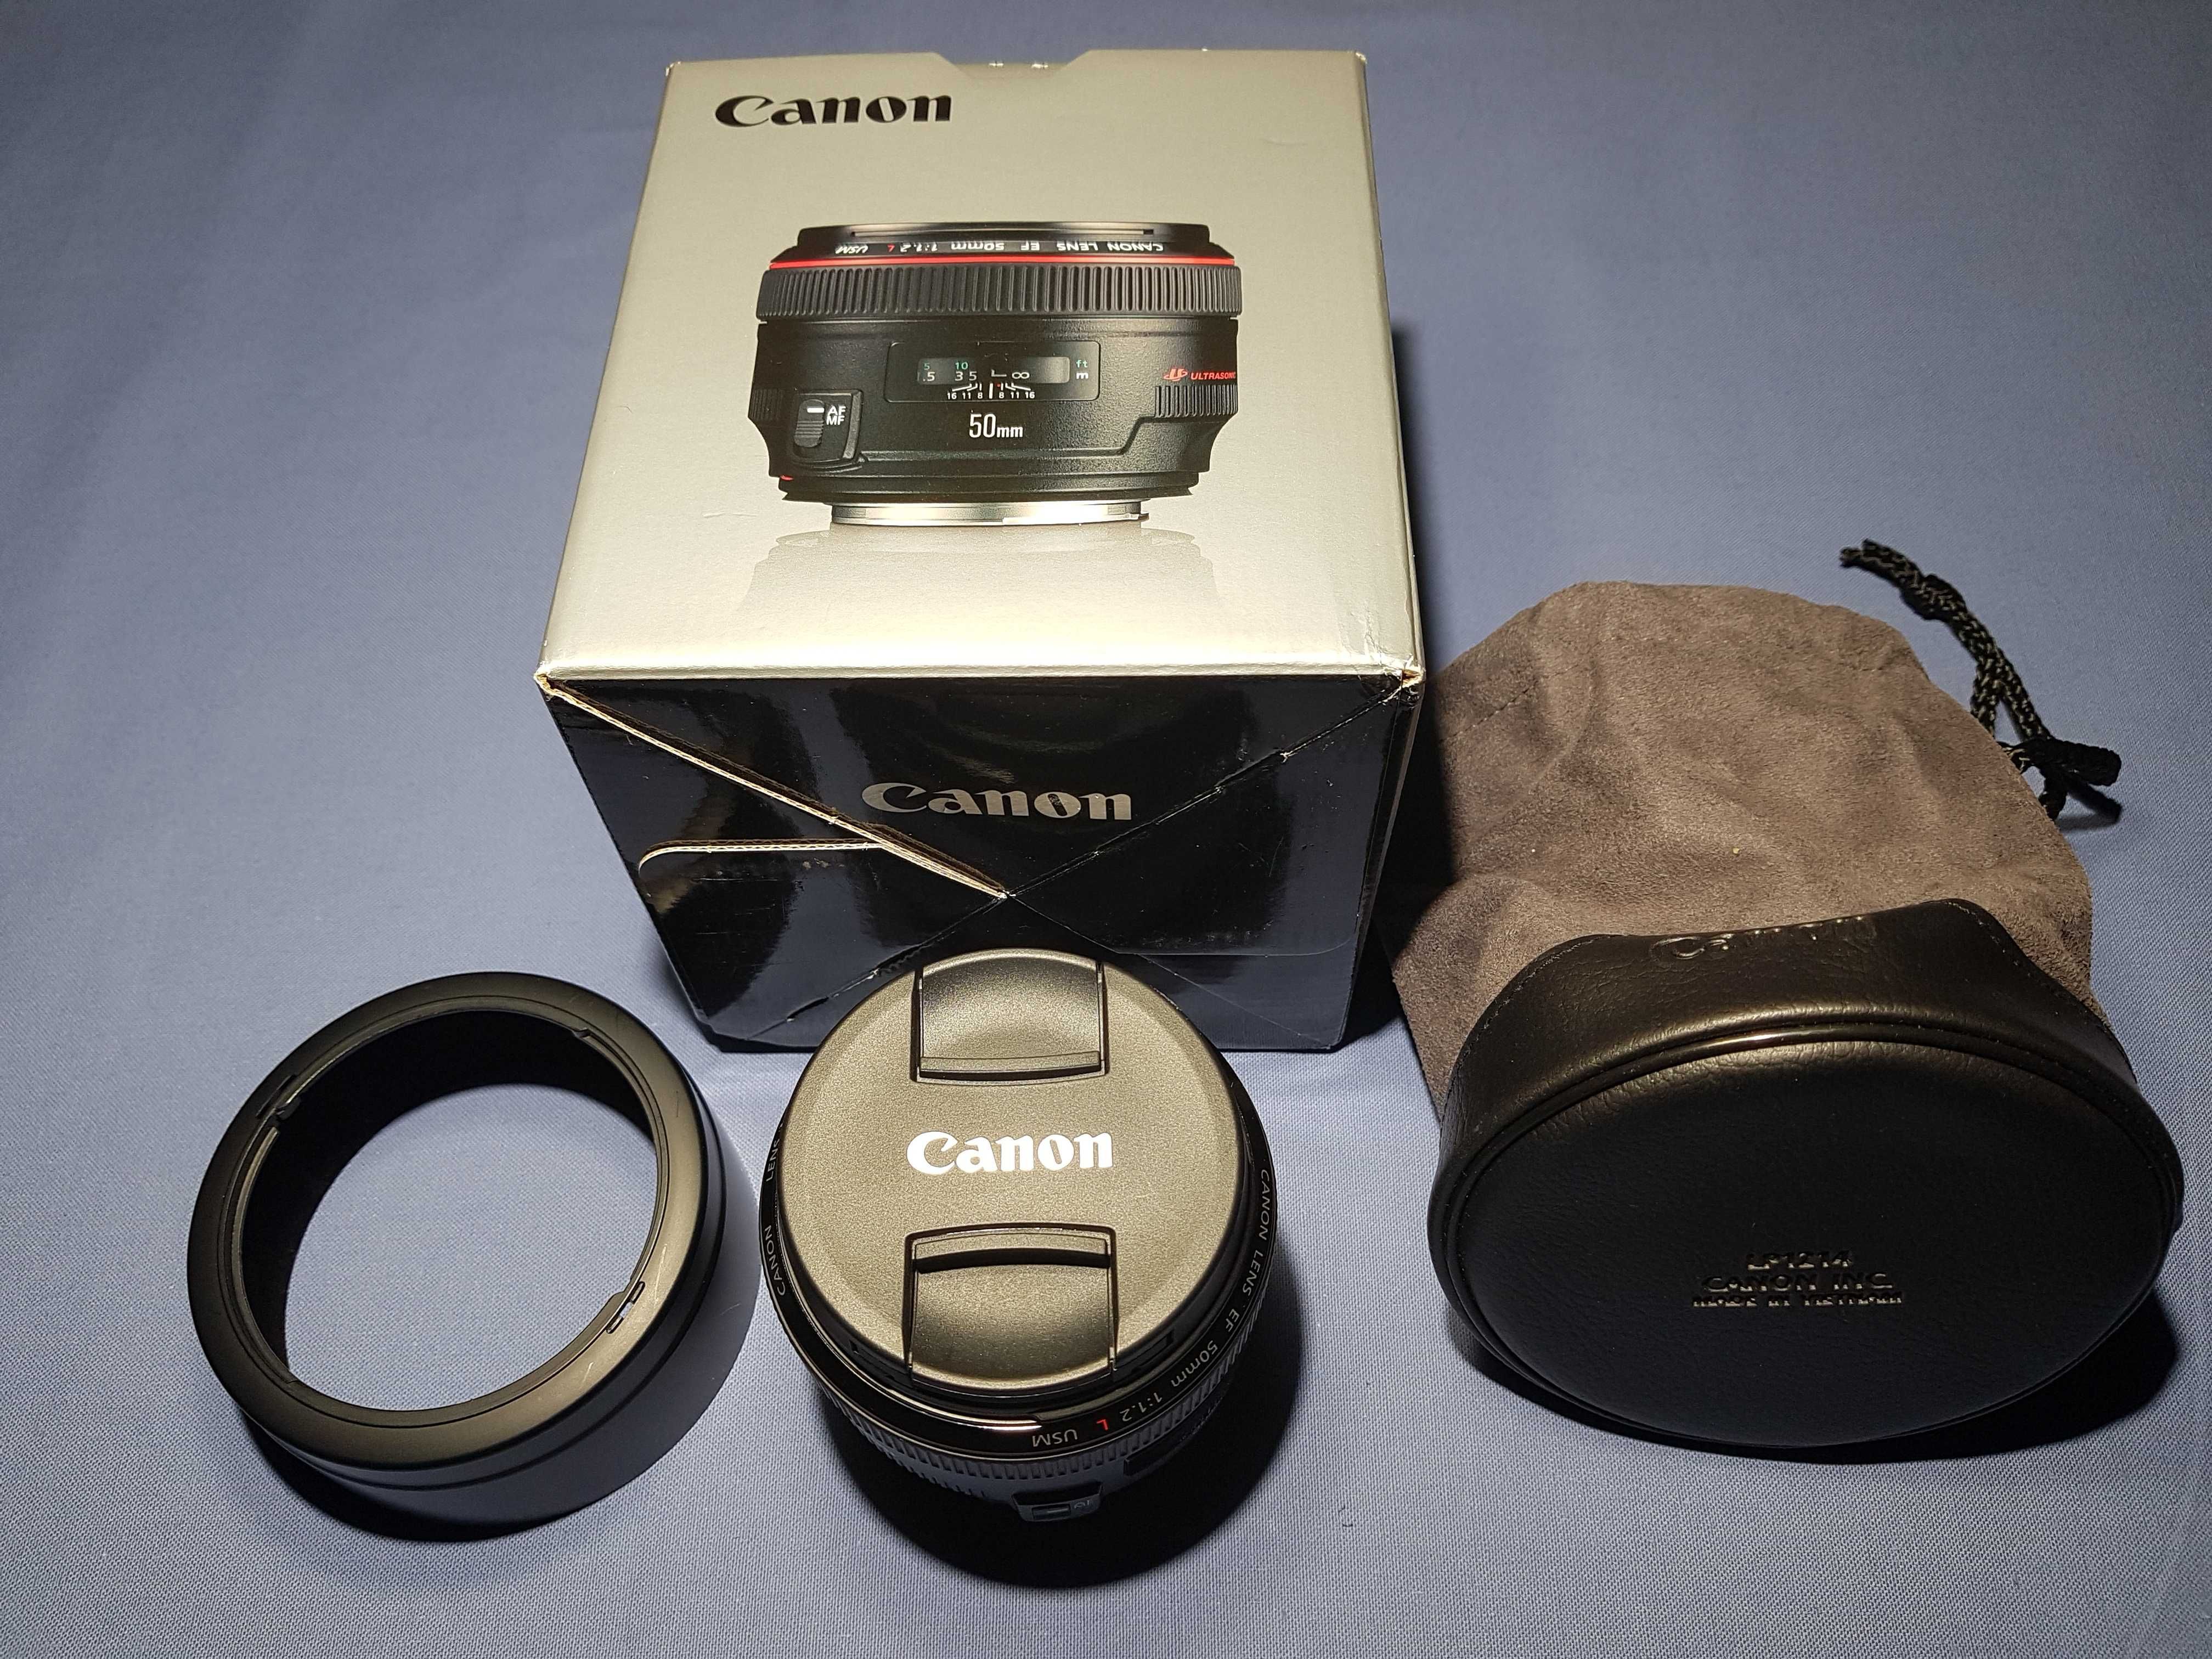 Об'єктив Canon EF 50mm f/1.2L USM